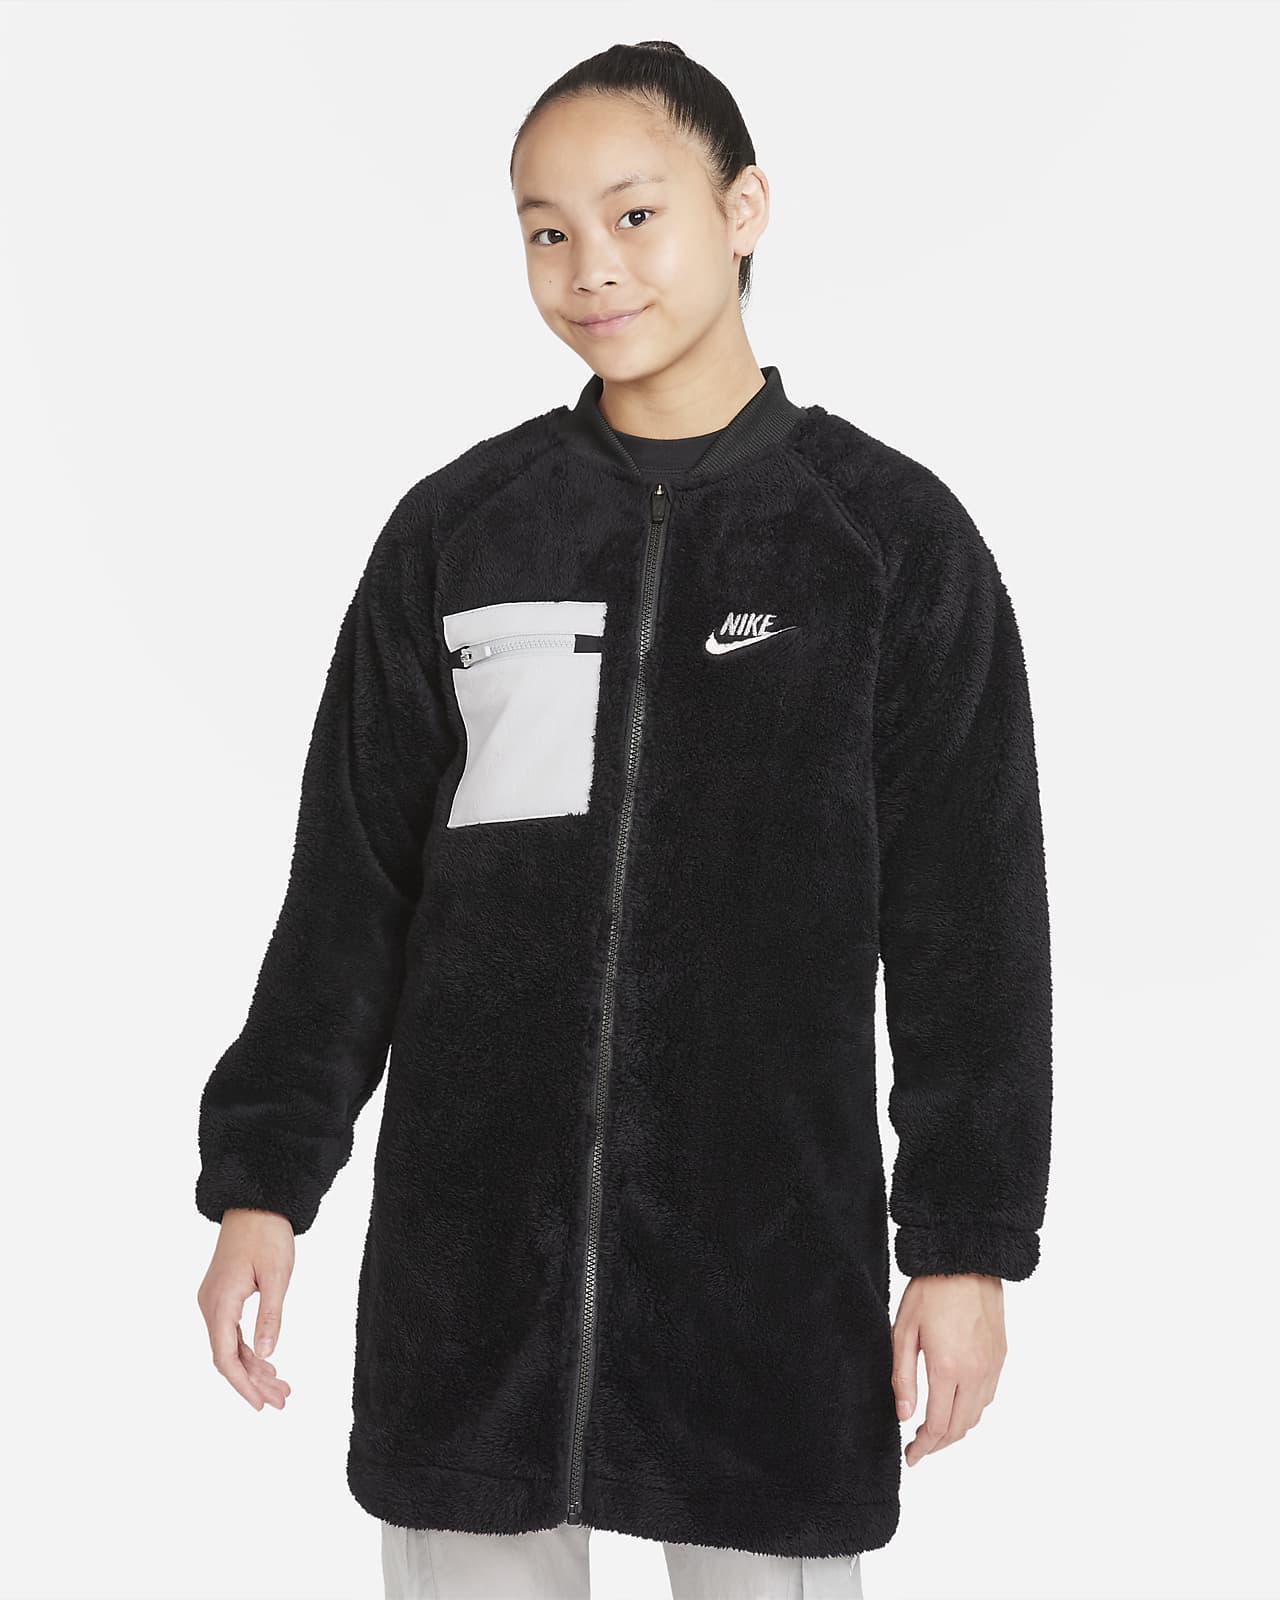 Nike Sportswear jakke i vinterutgave til store barn (jente)